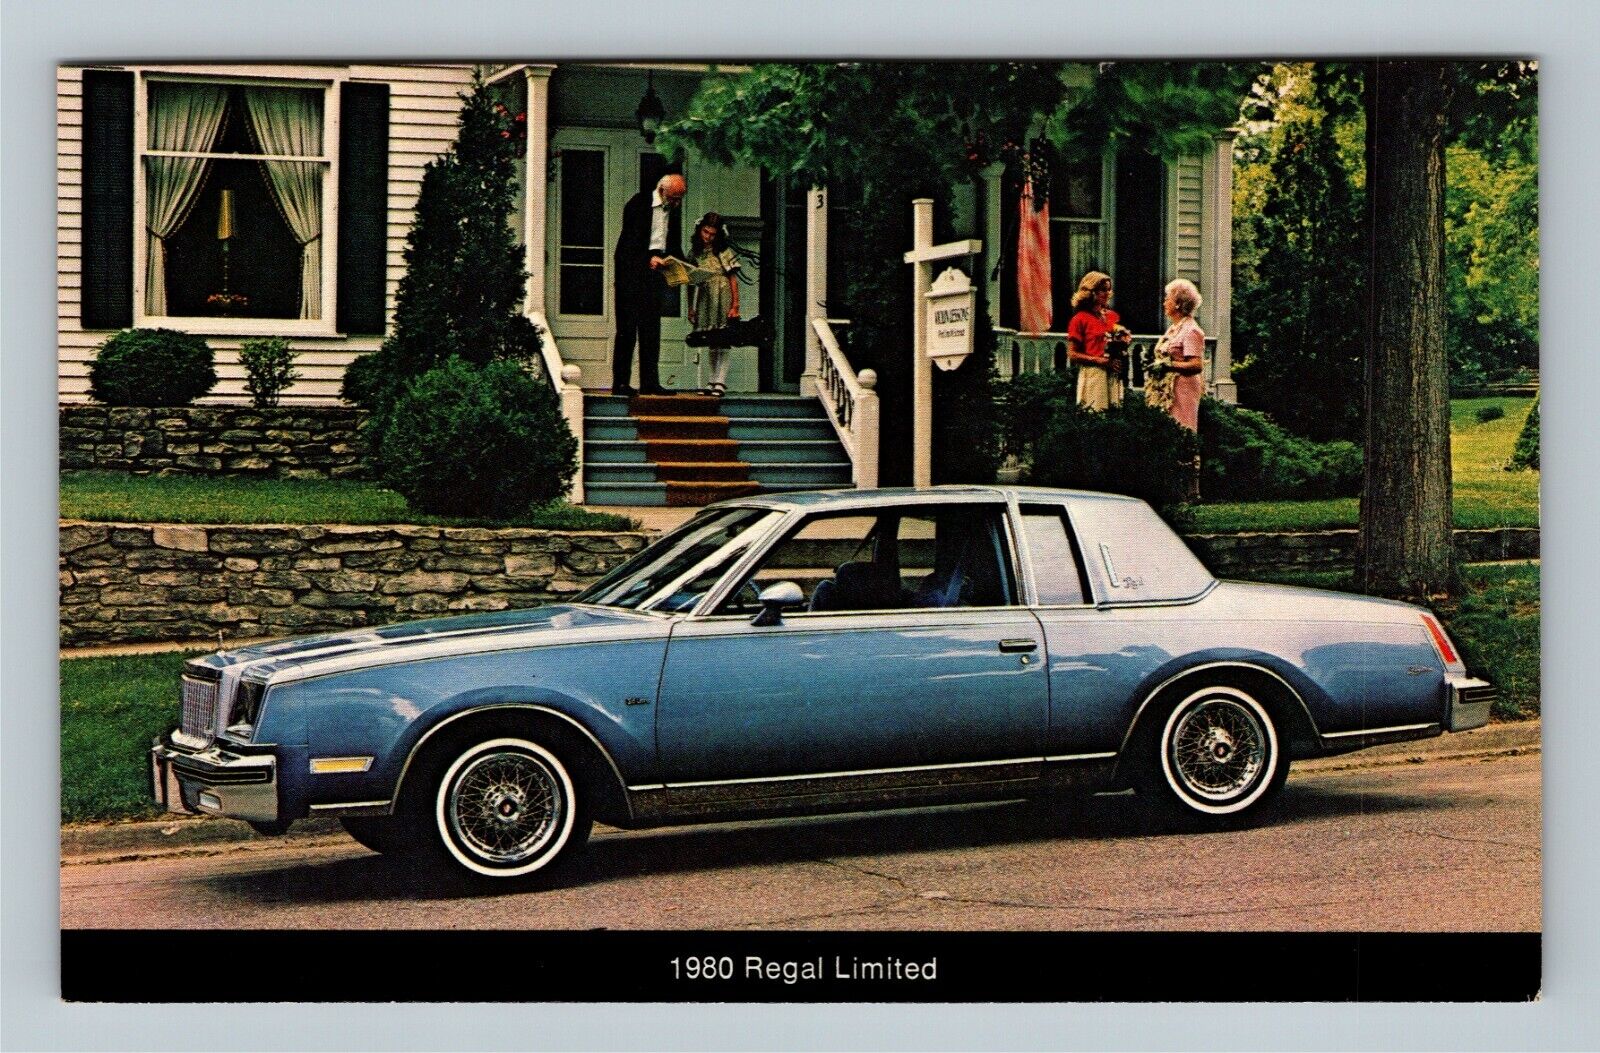 Car-1980 Buick Regal Limited 2 Door, Blue, Family Home, Vintage Postcard